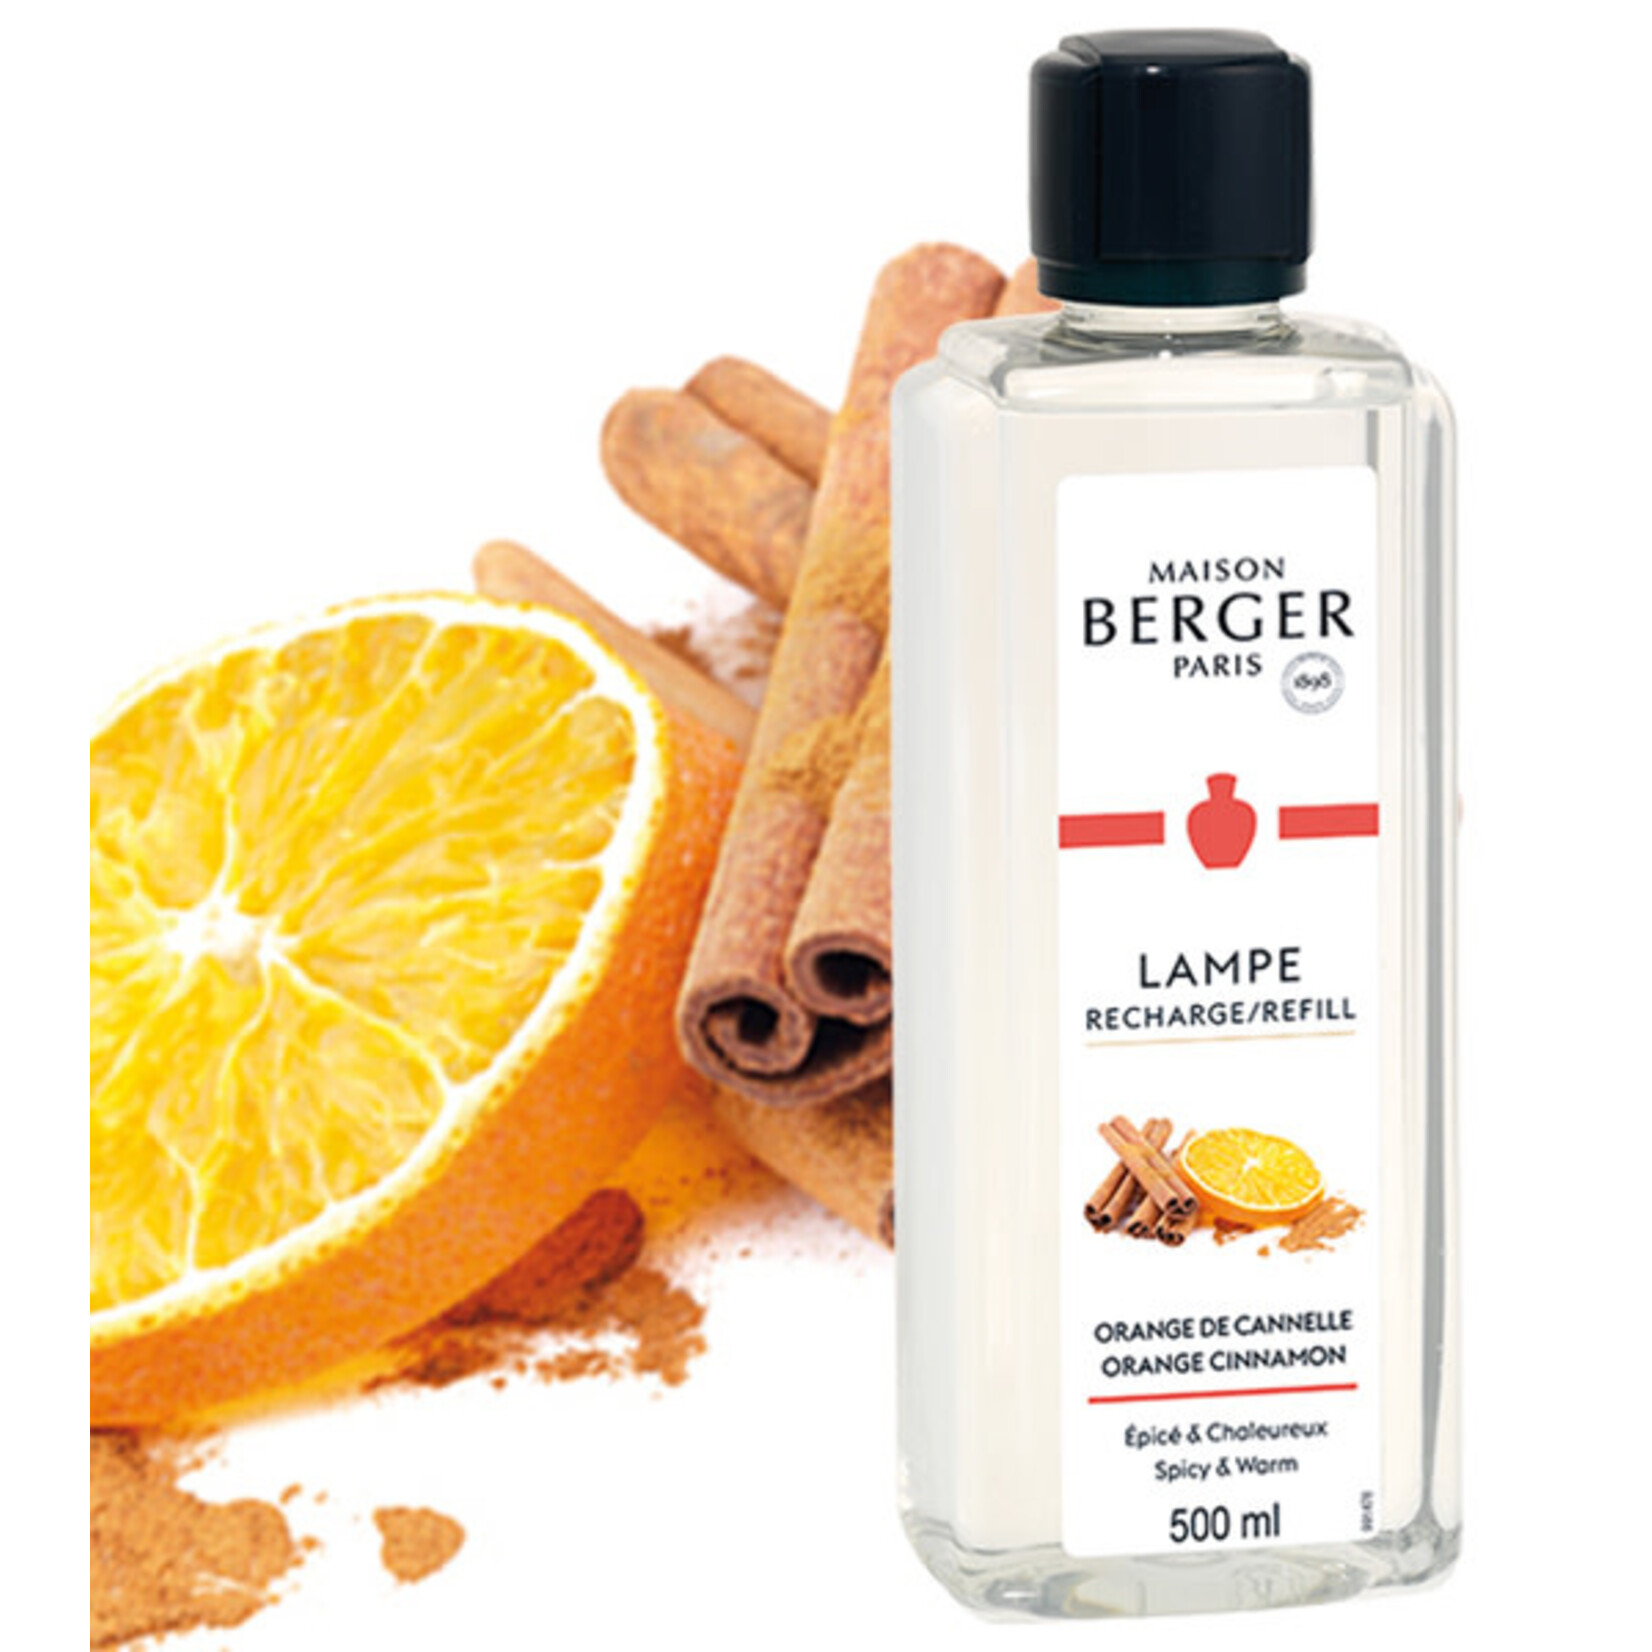 Maison Berger Paris 1898 500 ml Huisparfum Orange Cinnamon Maison Berger Orange de Cannelle huisparfum Maison Berger 115018